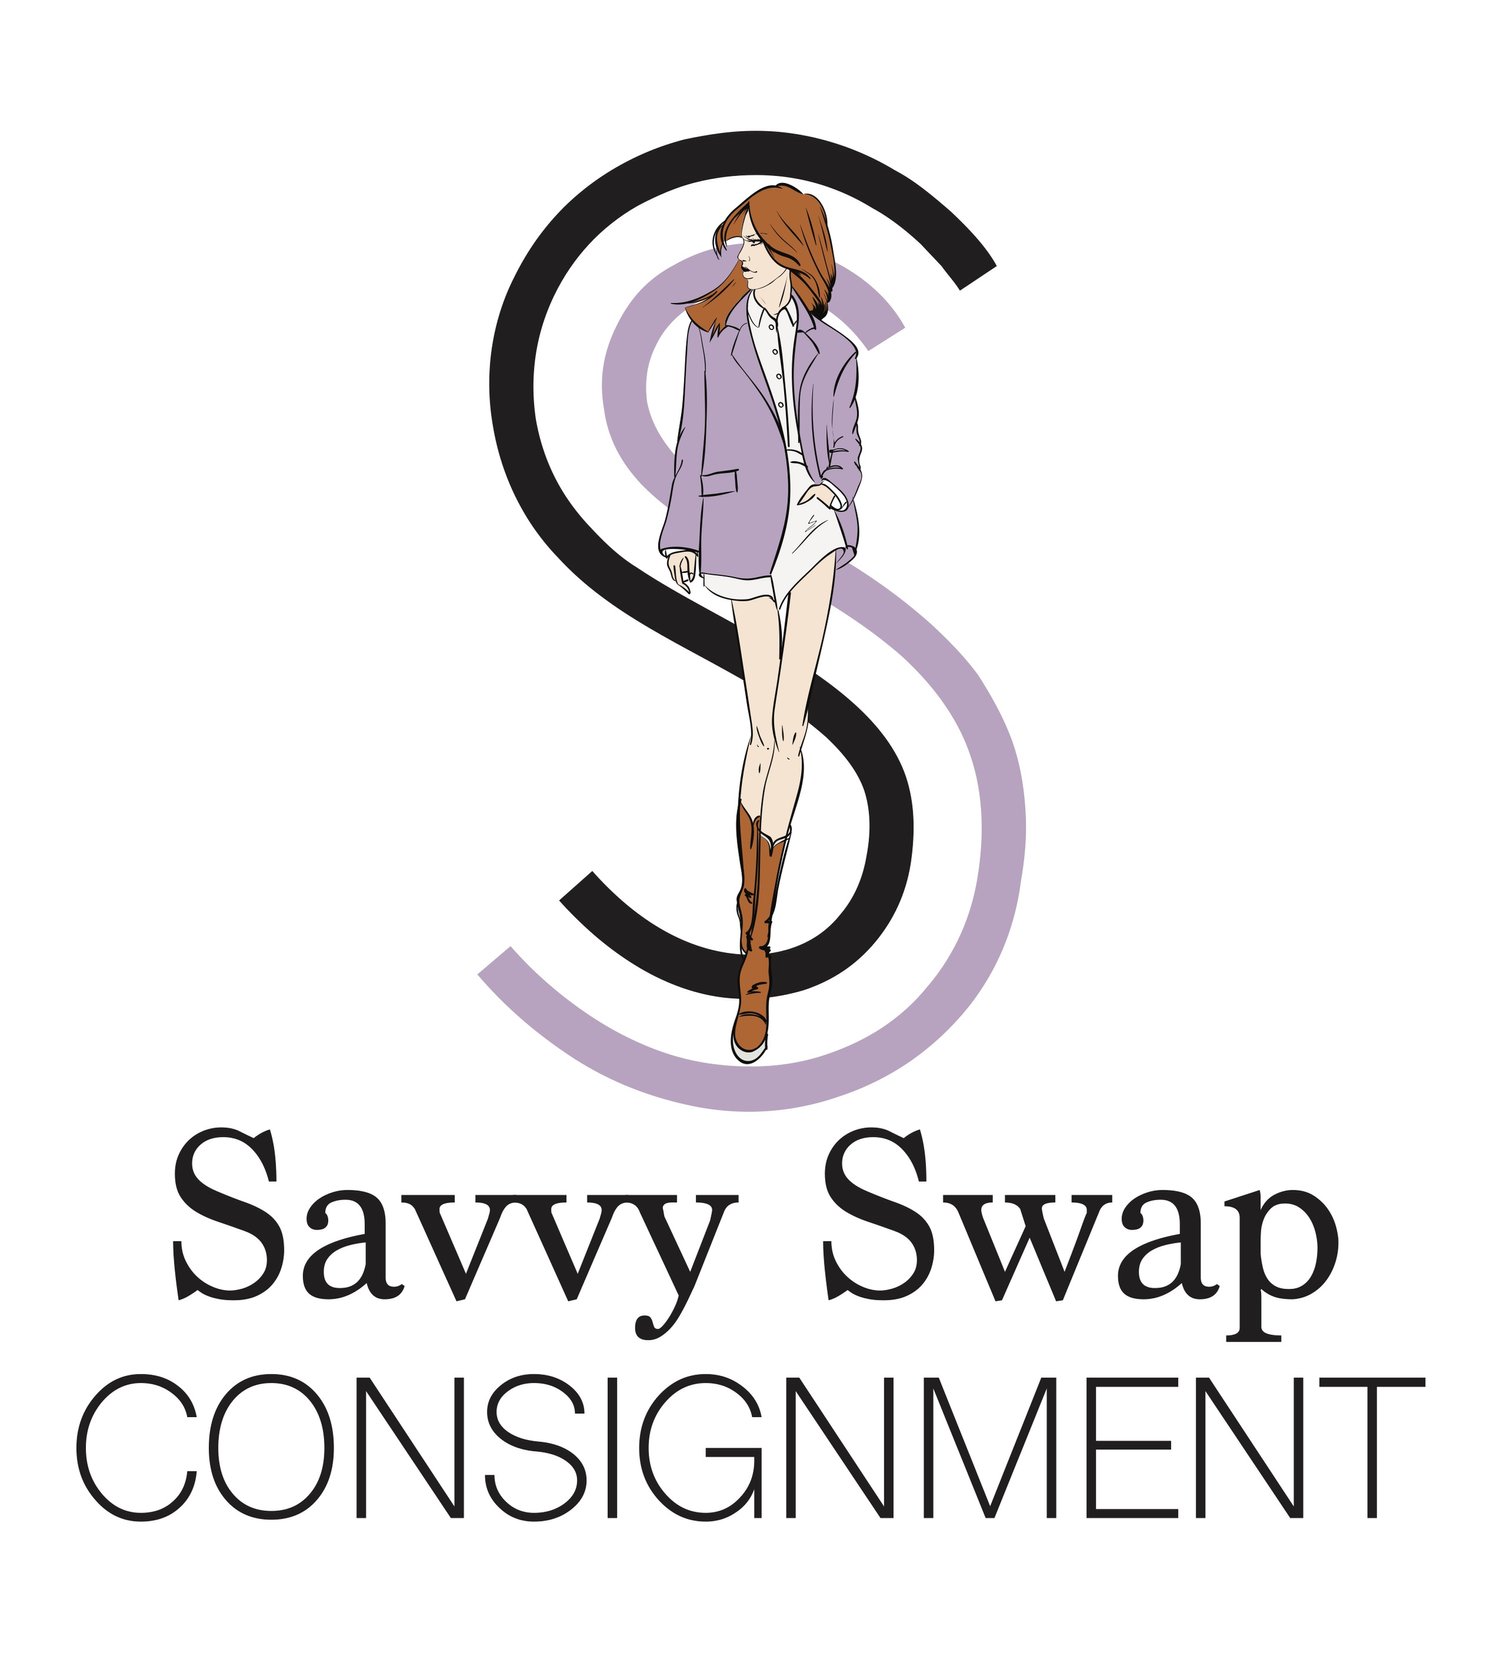 Savvy Swap Consignment